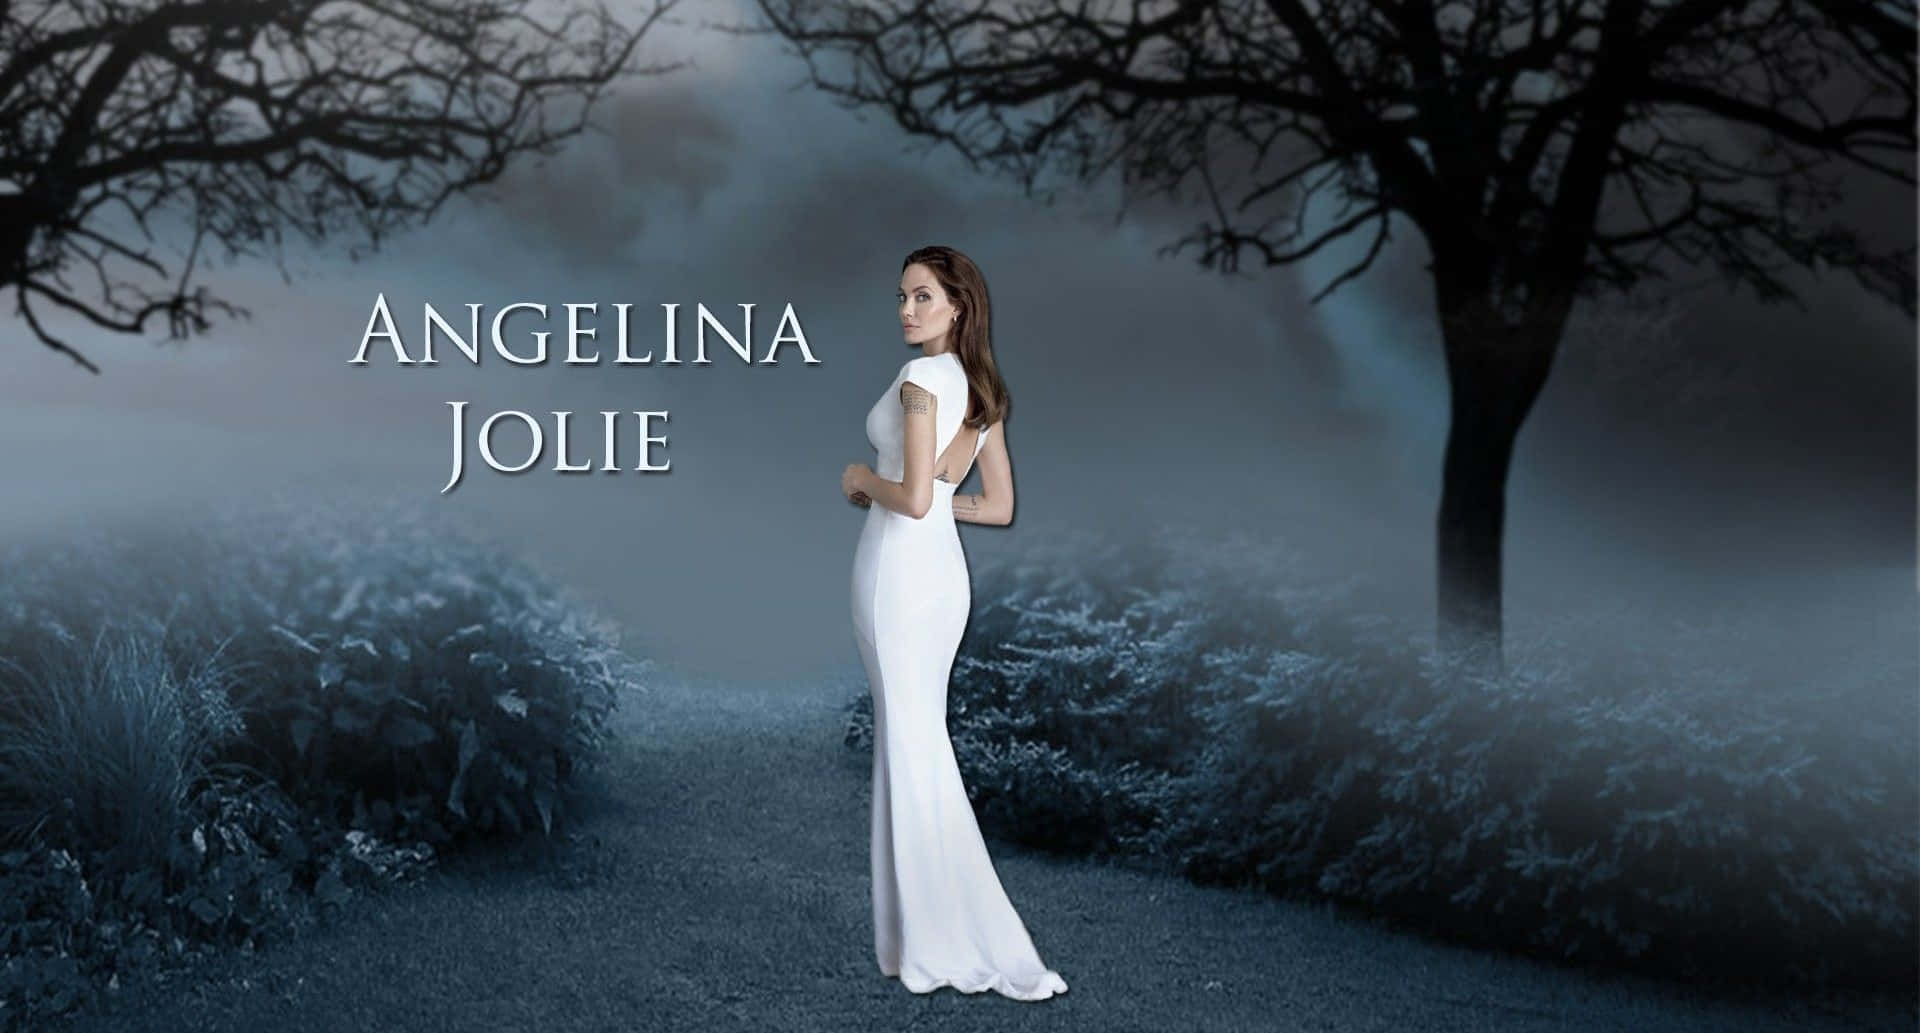 Angelina Jolie, Hollywood A-List actress